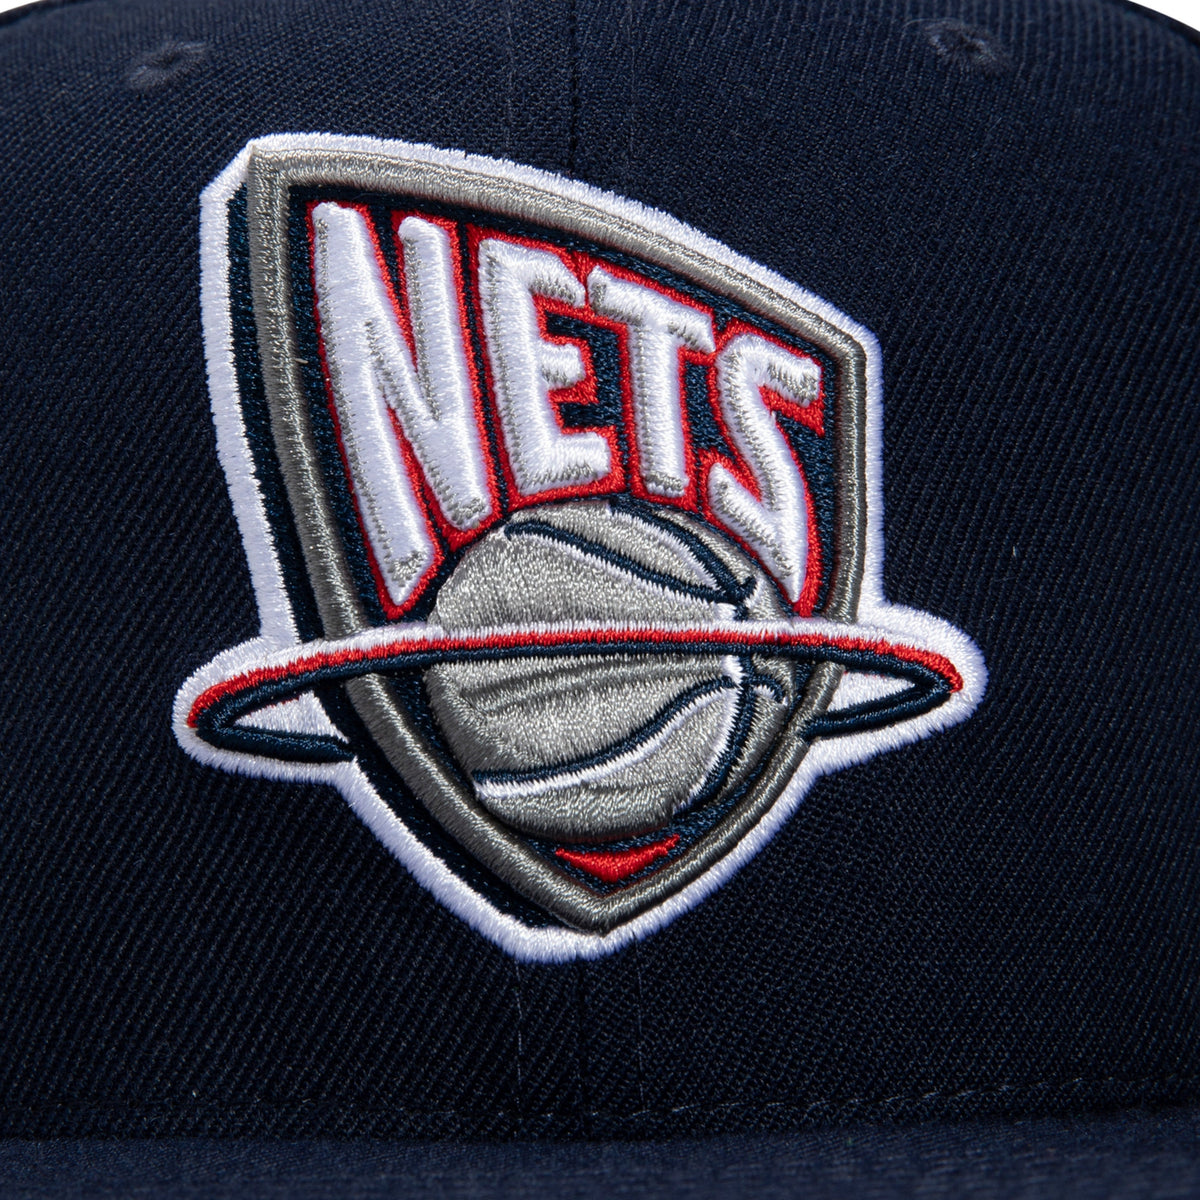 New Jersey Nets Pop Mitchell & Ness Snapback Hat